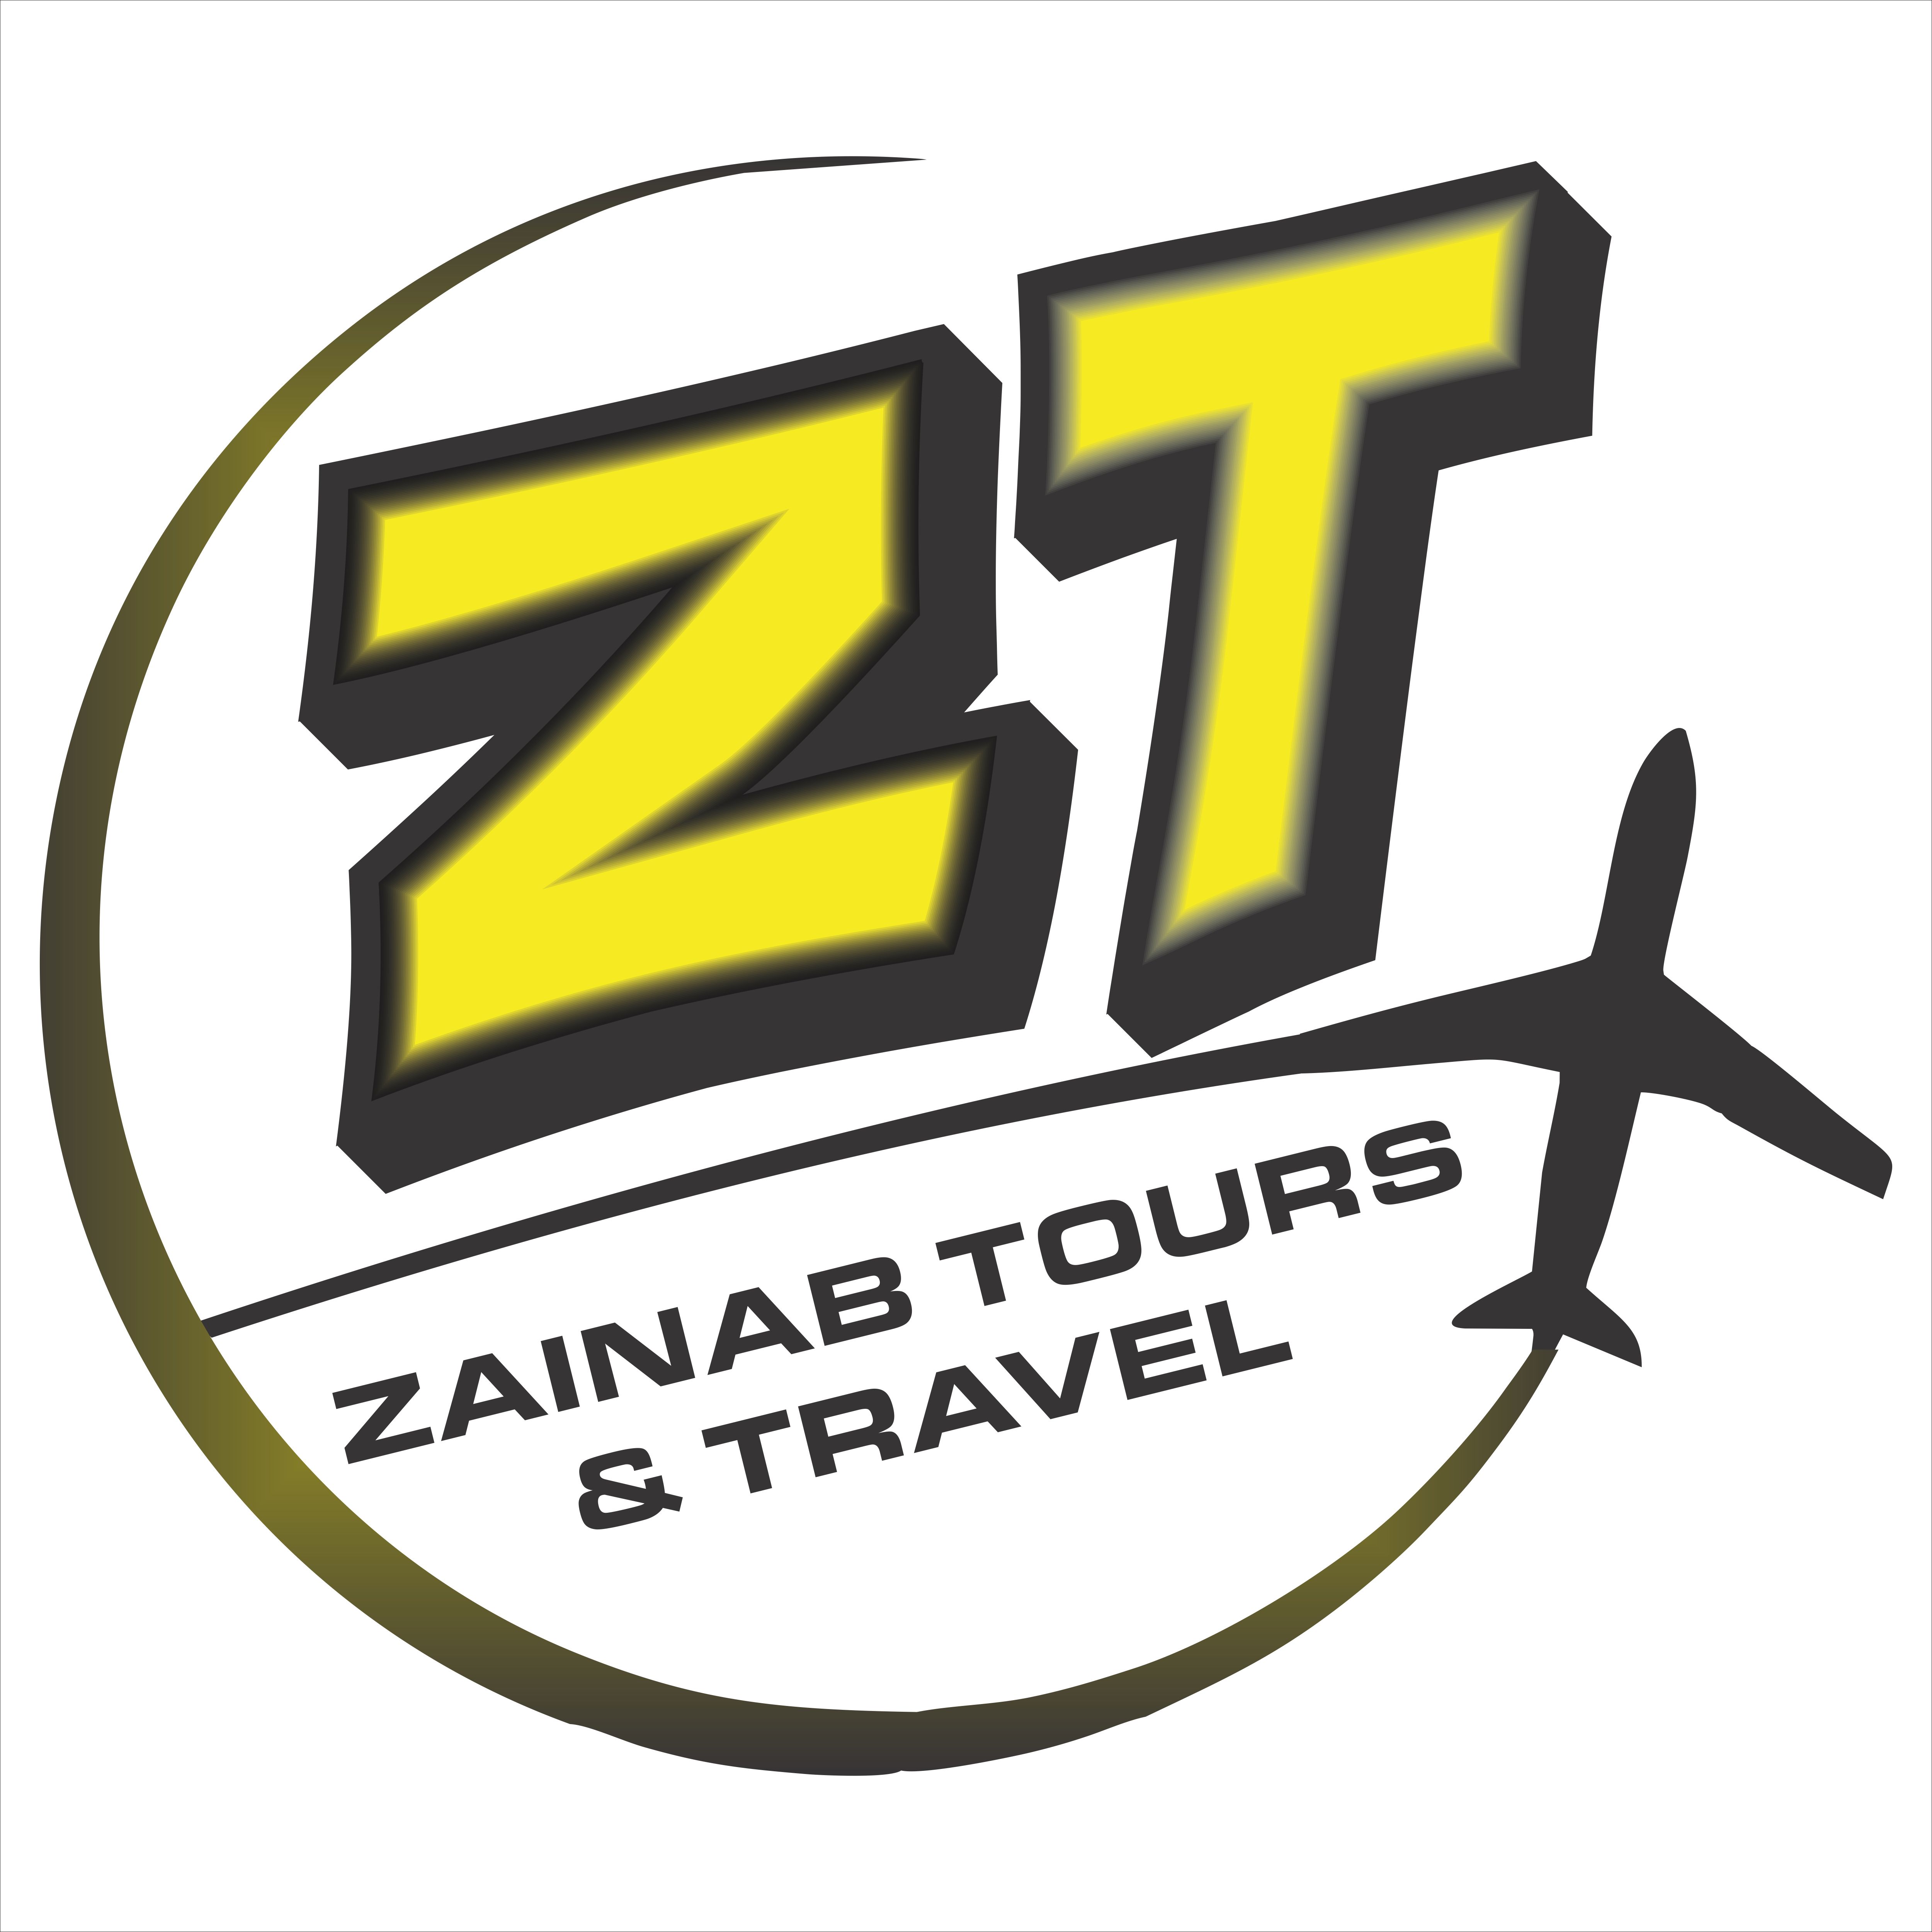 Zainab Tours and Travels